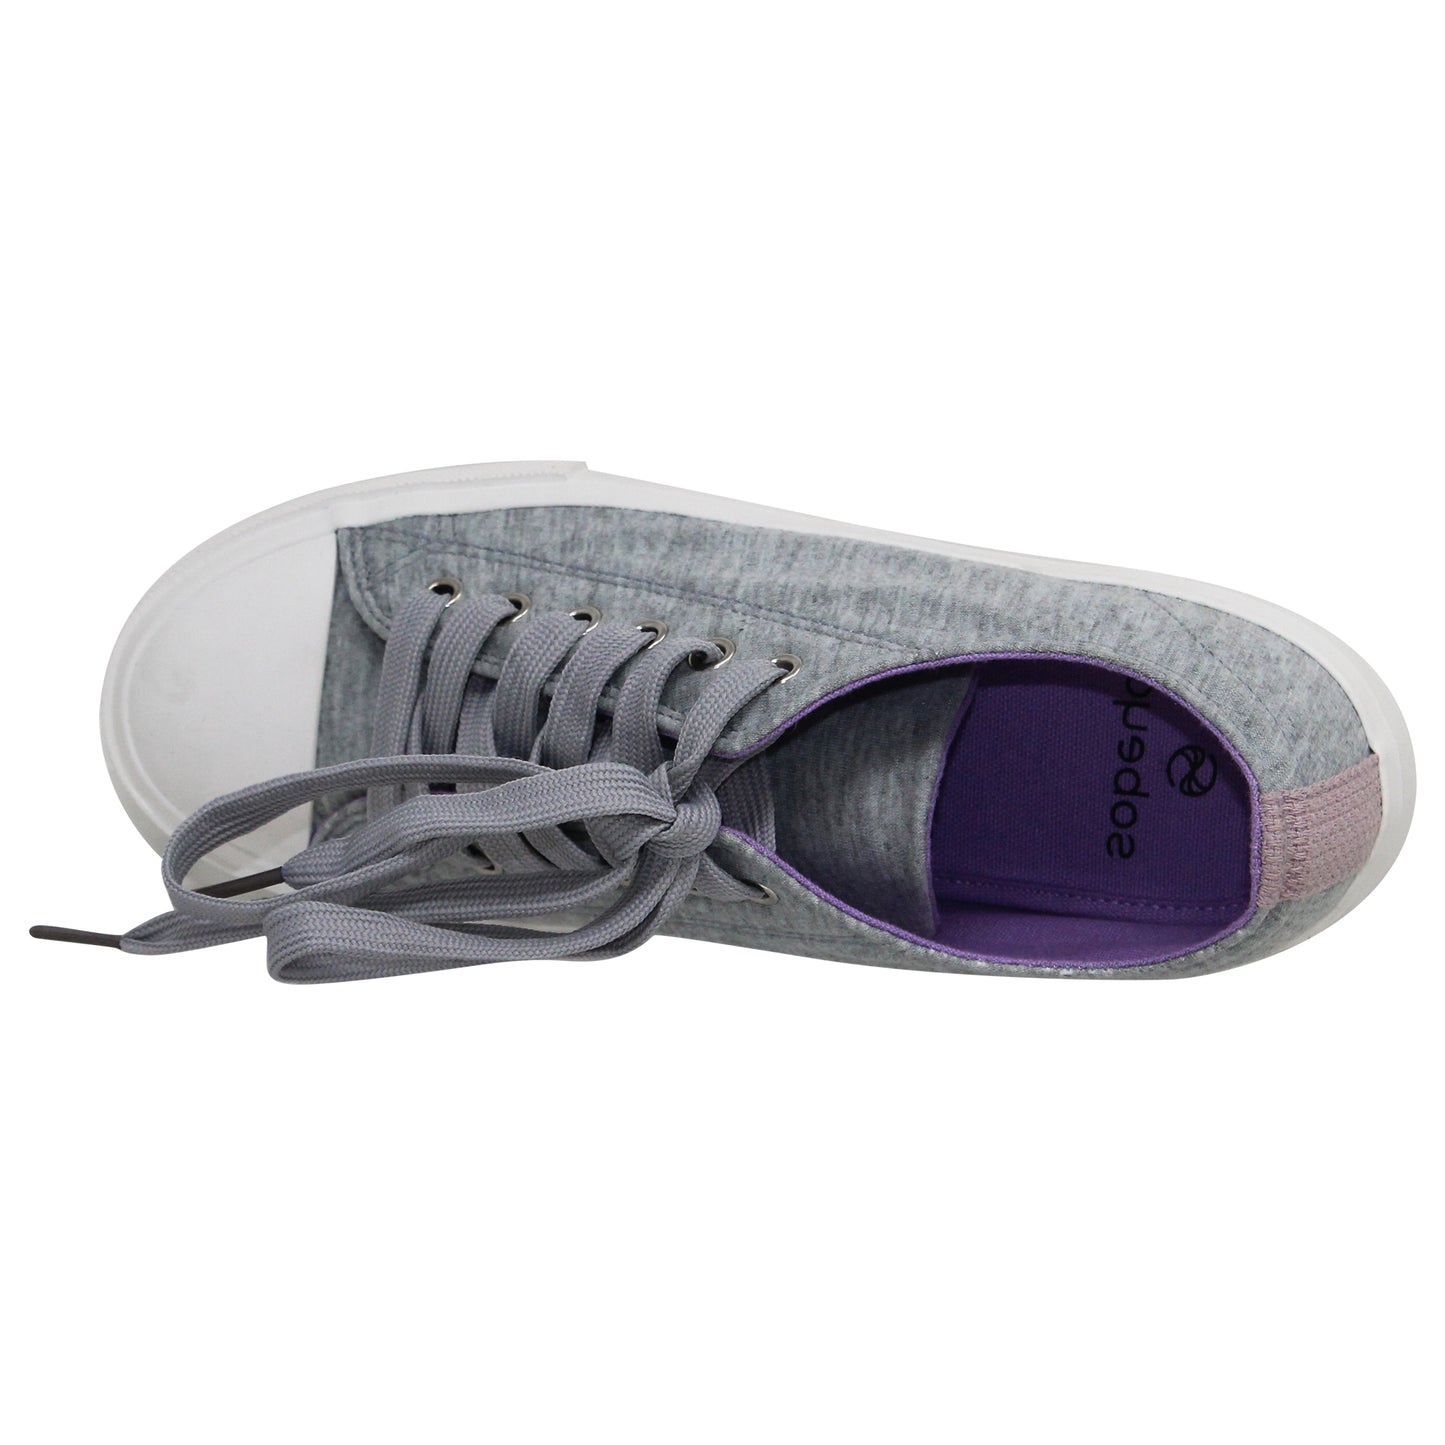 SOBEYO Women's Sneakers Canvas Lace-Up Low Top Memory Foam Cushion Gray